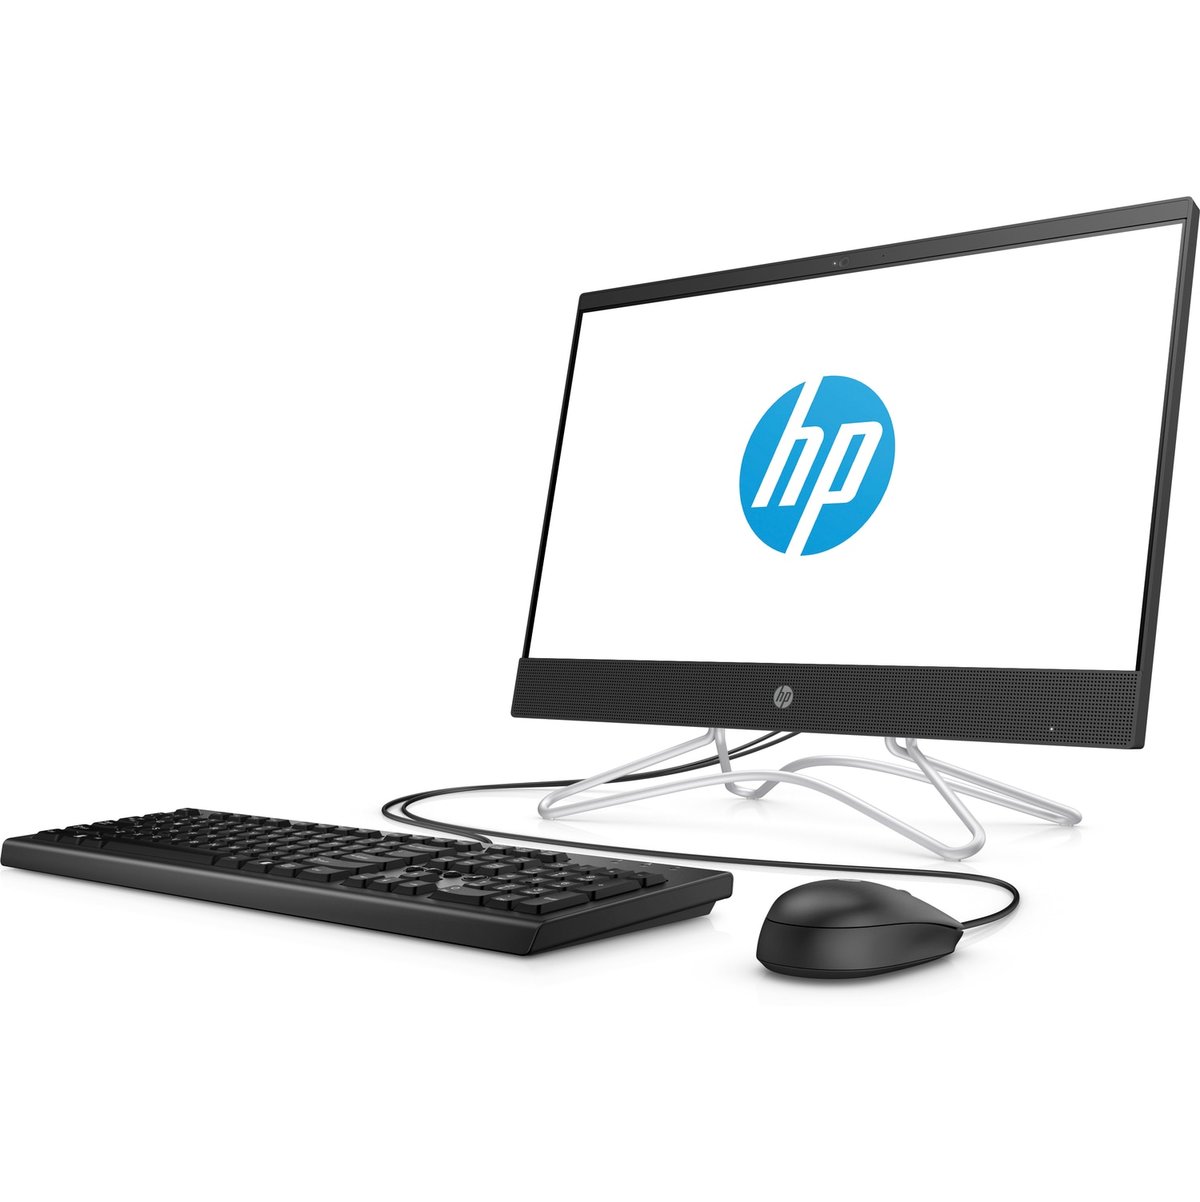 HP 200 G3 All-in-One PC Core i3-8130U, Memory 4GB, Storage 1TB, UHD Graphics 620, 21.5